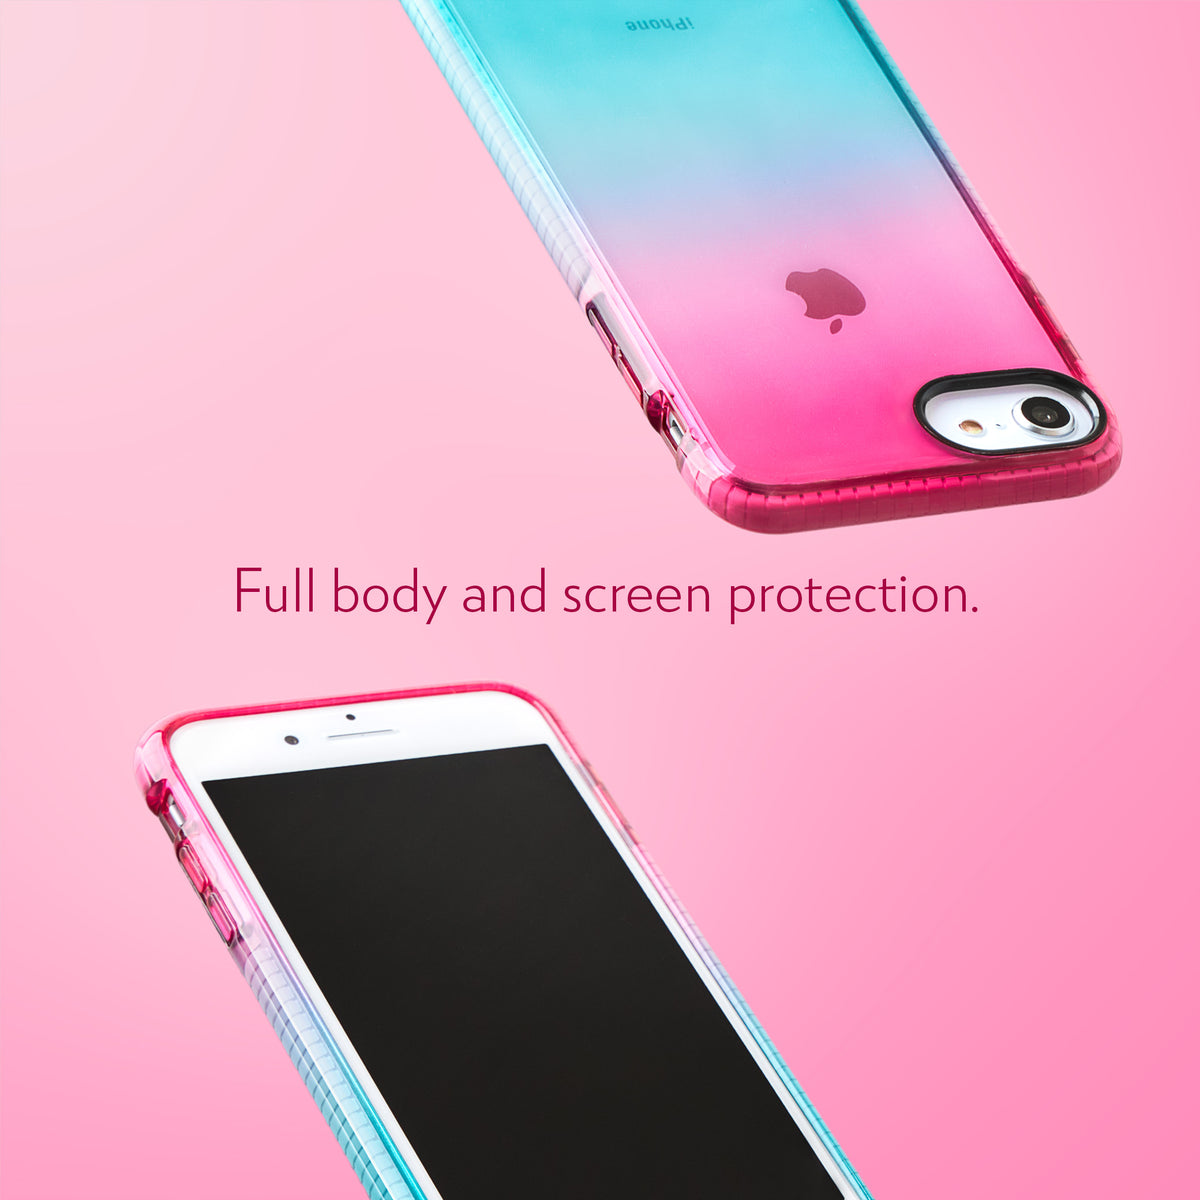 Coverlab Apple iPhone 8 Plus Case Cover, Easy Grip Slim Armor Bumper Case for iPhone 8 Plus - Teal